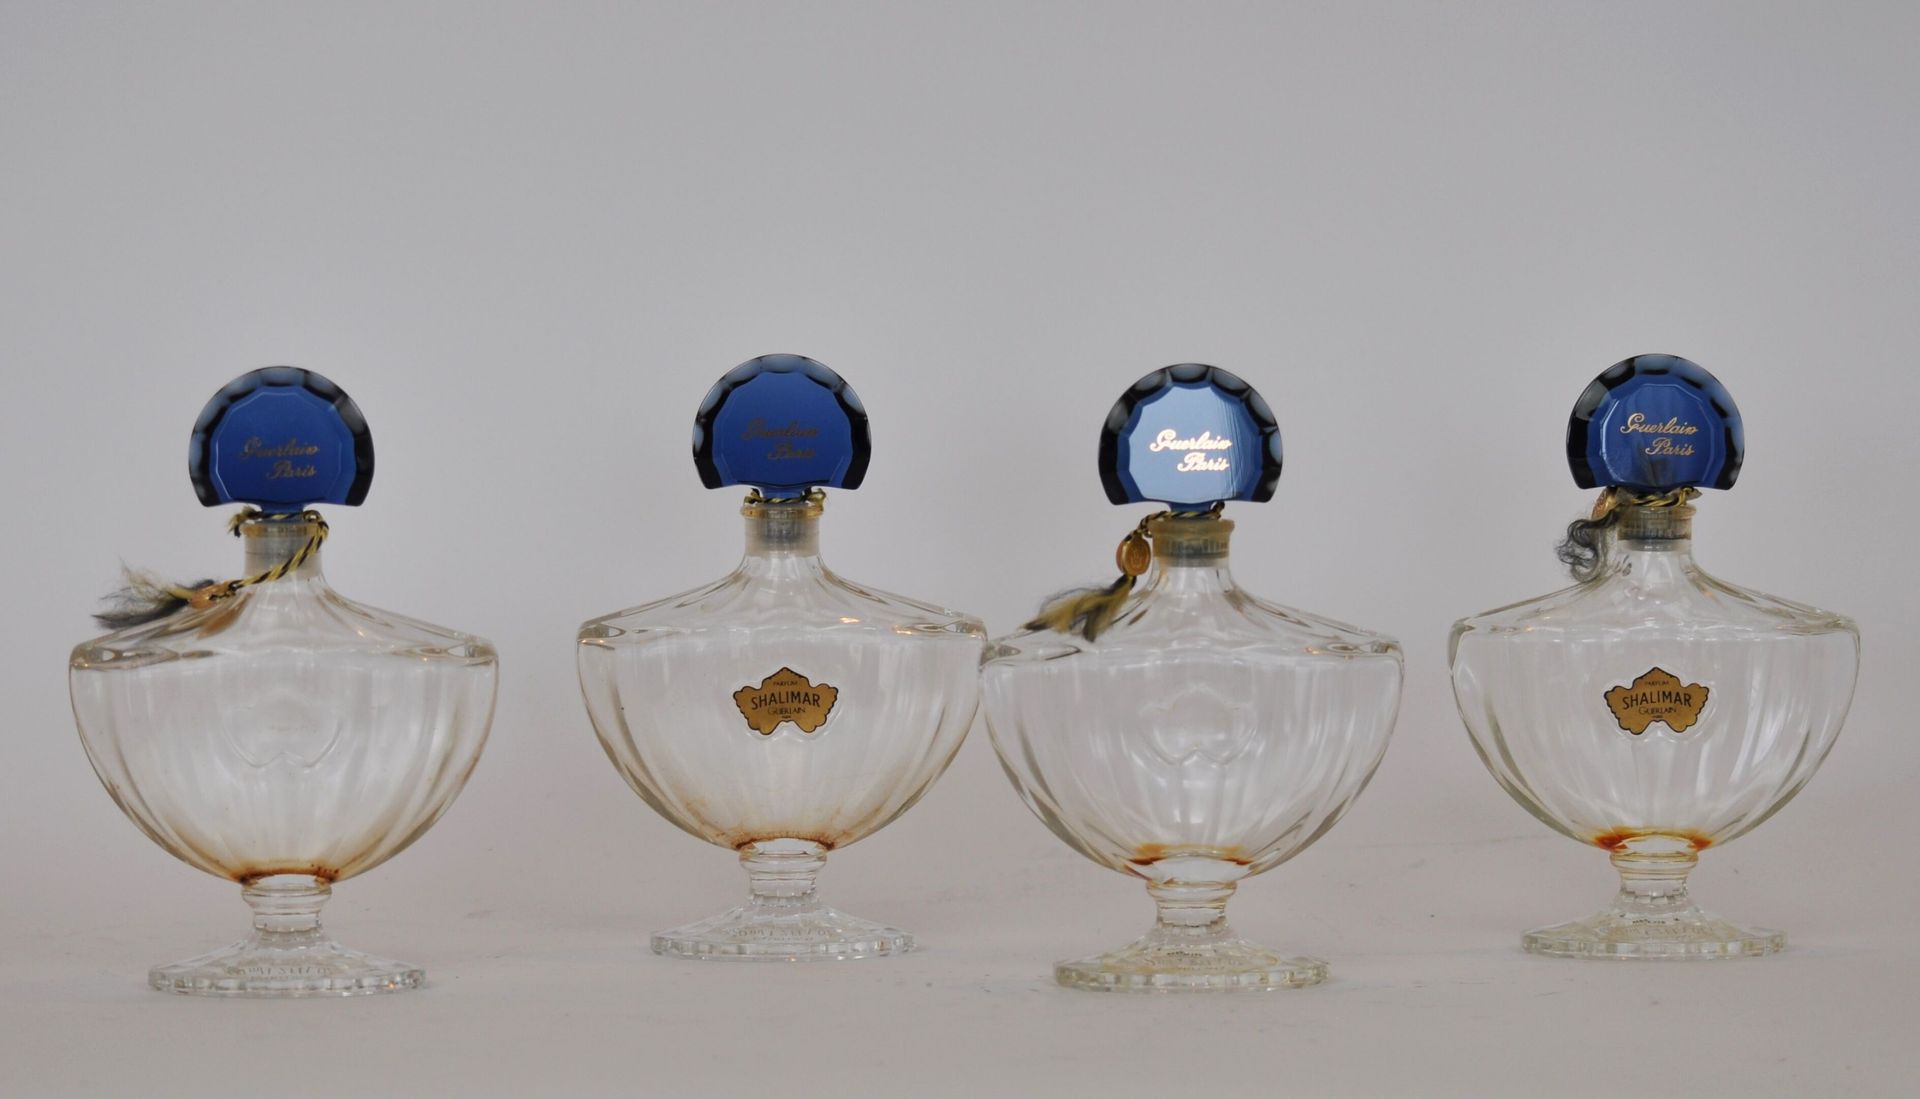 Null 巴黎古埃隆 "夏利玛尔 "腕表

套装的4个瓶子模型 "蝙蝠 "由无色玻璃压制而成，蓝色的瓶塞是滴定的。

高度：15厘米



2021年6月23日&hellip;